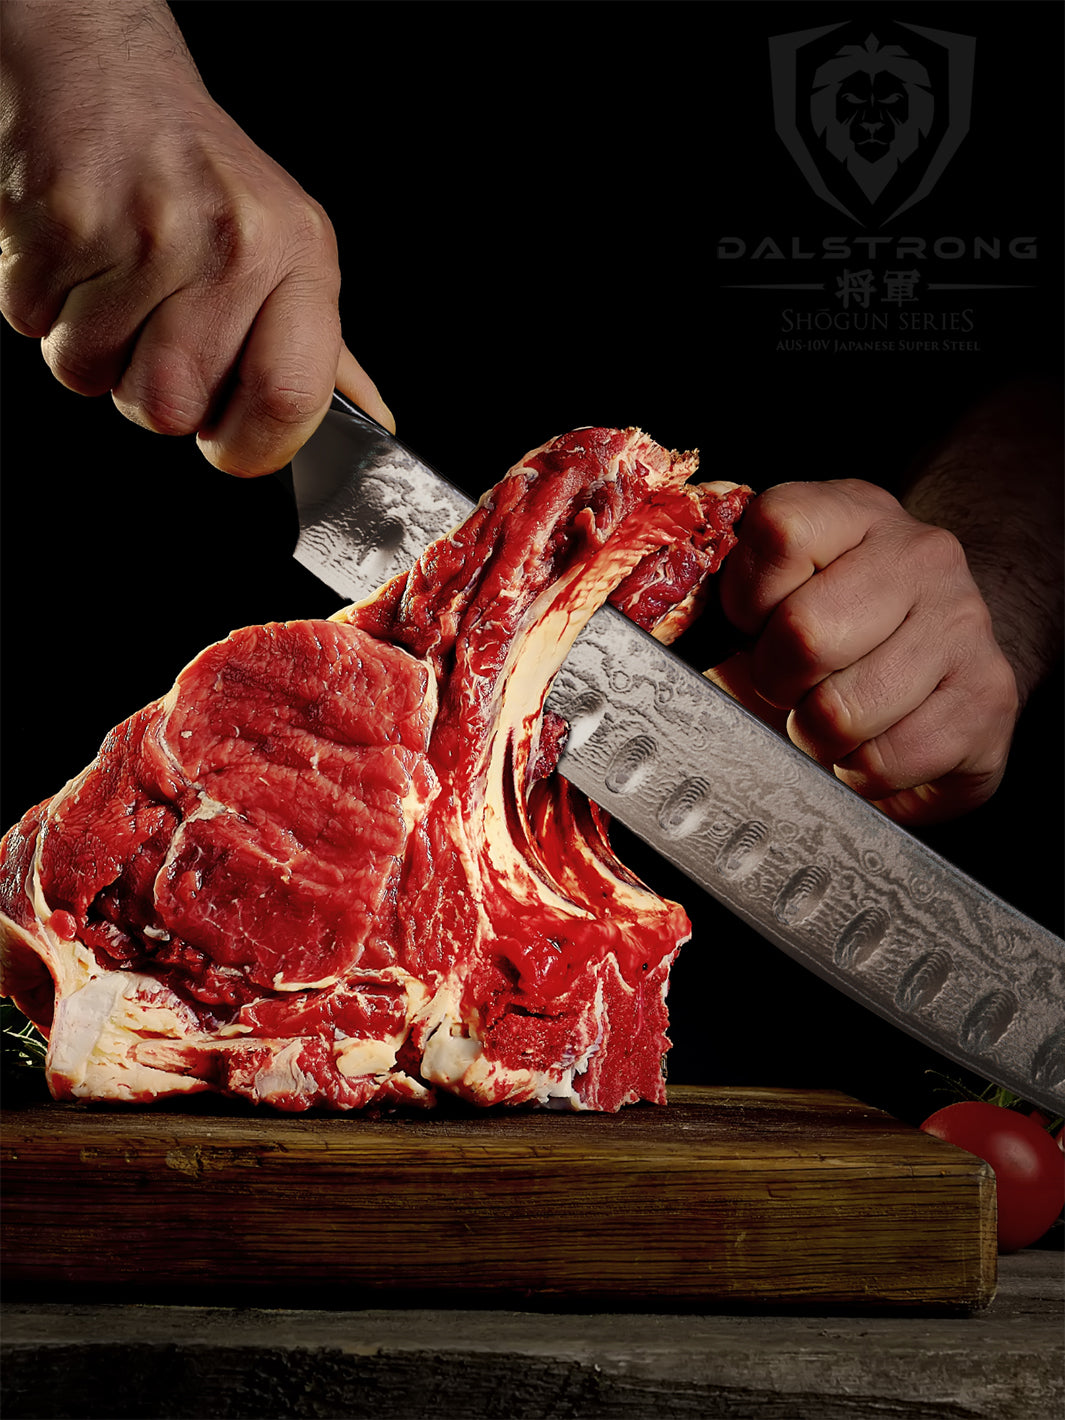 8 Butcher & Breaking Knife| Cimiter | Shogun Series | Dalstrong